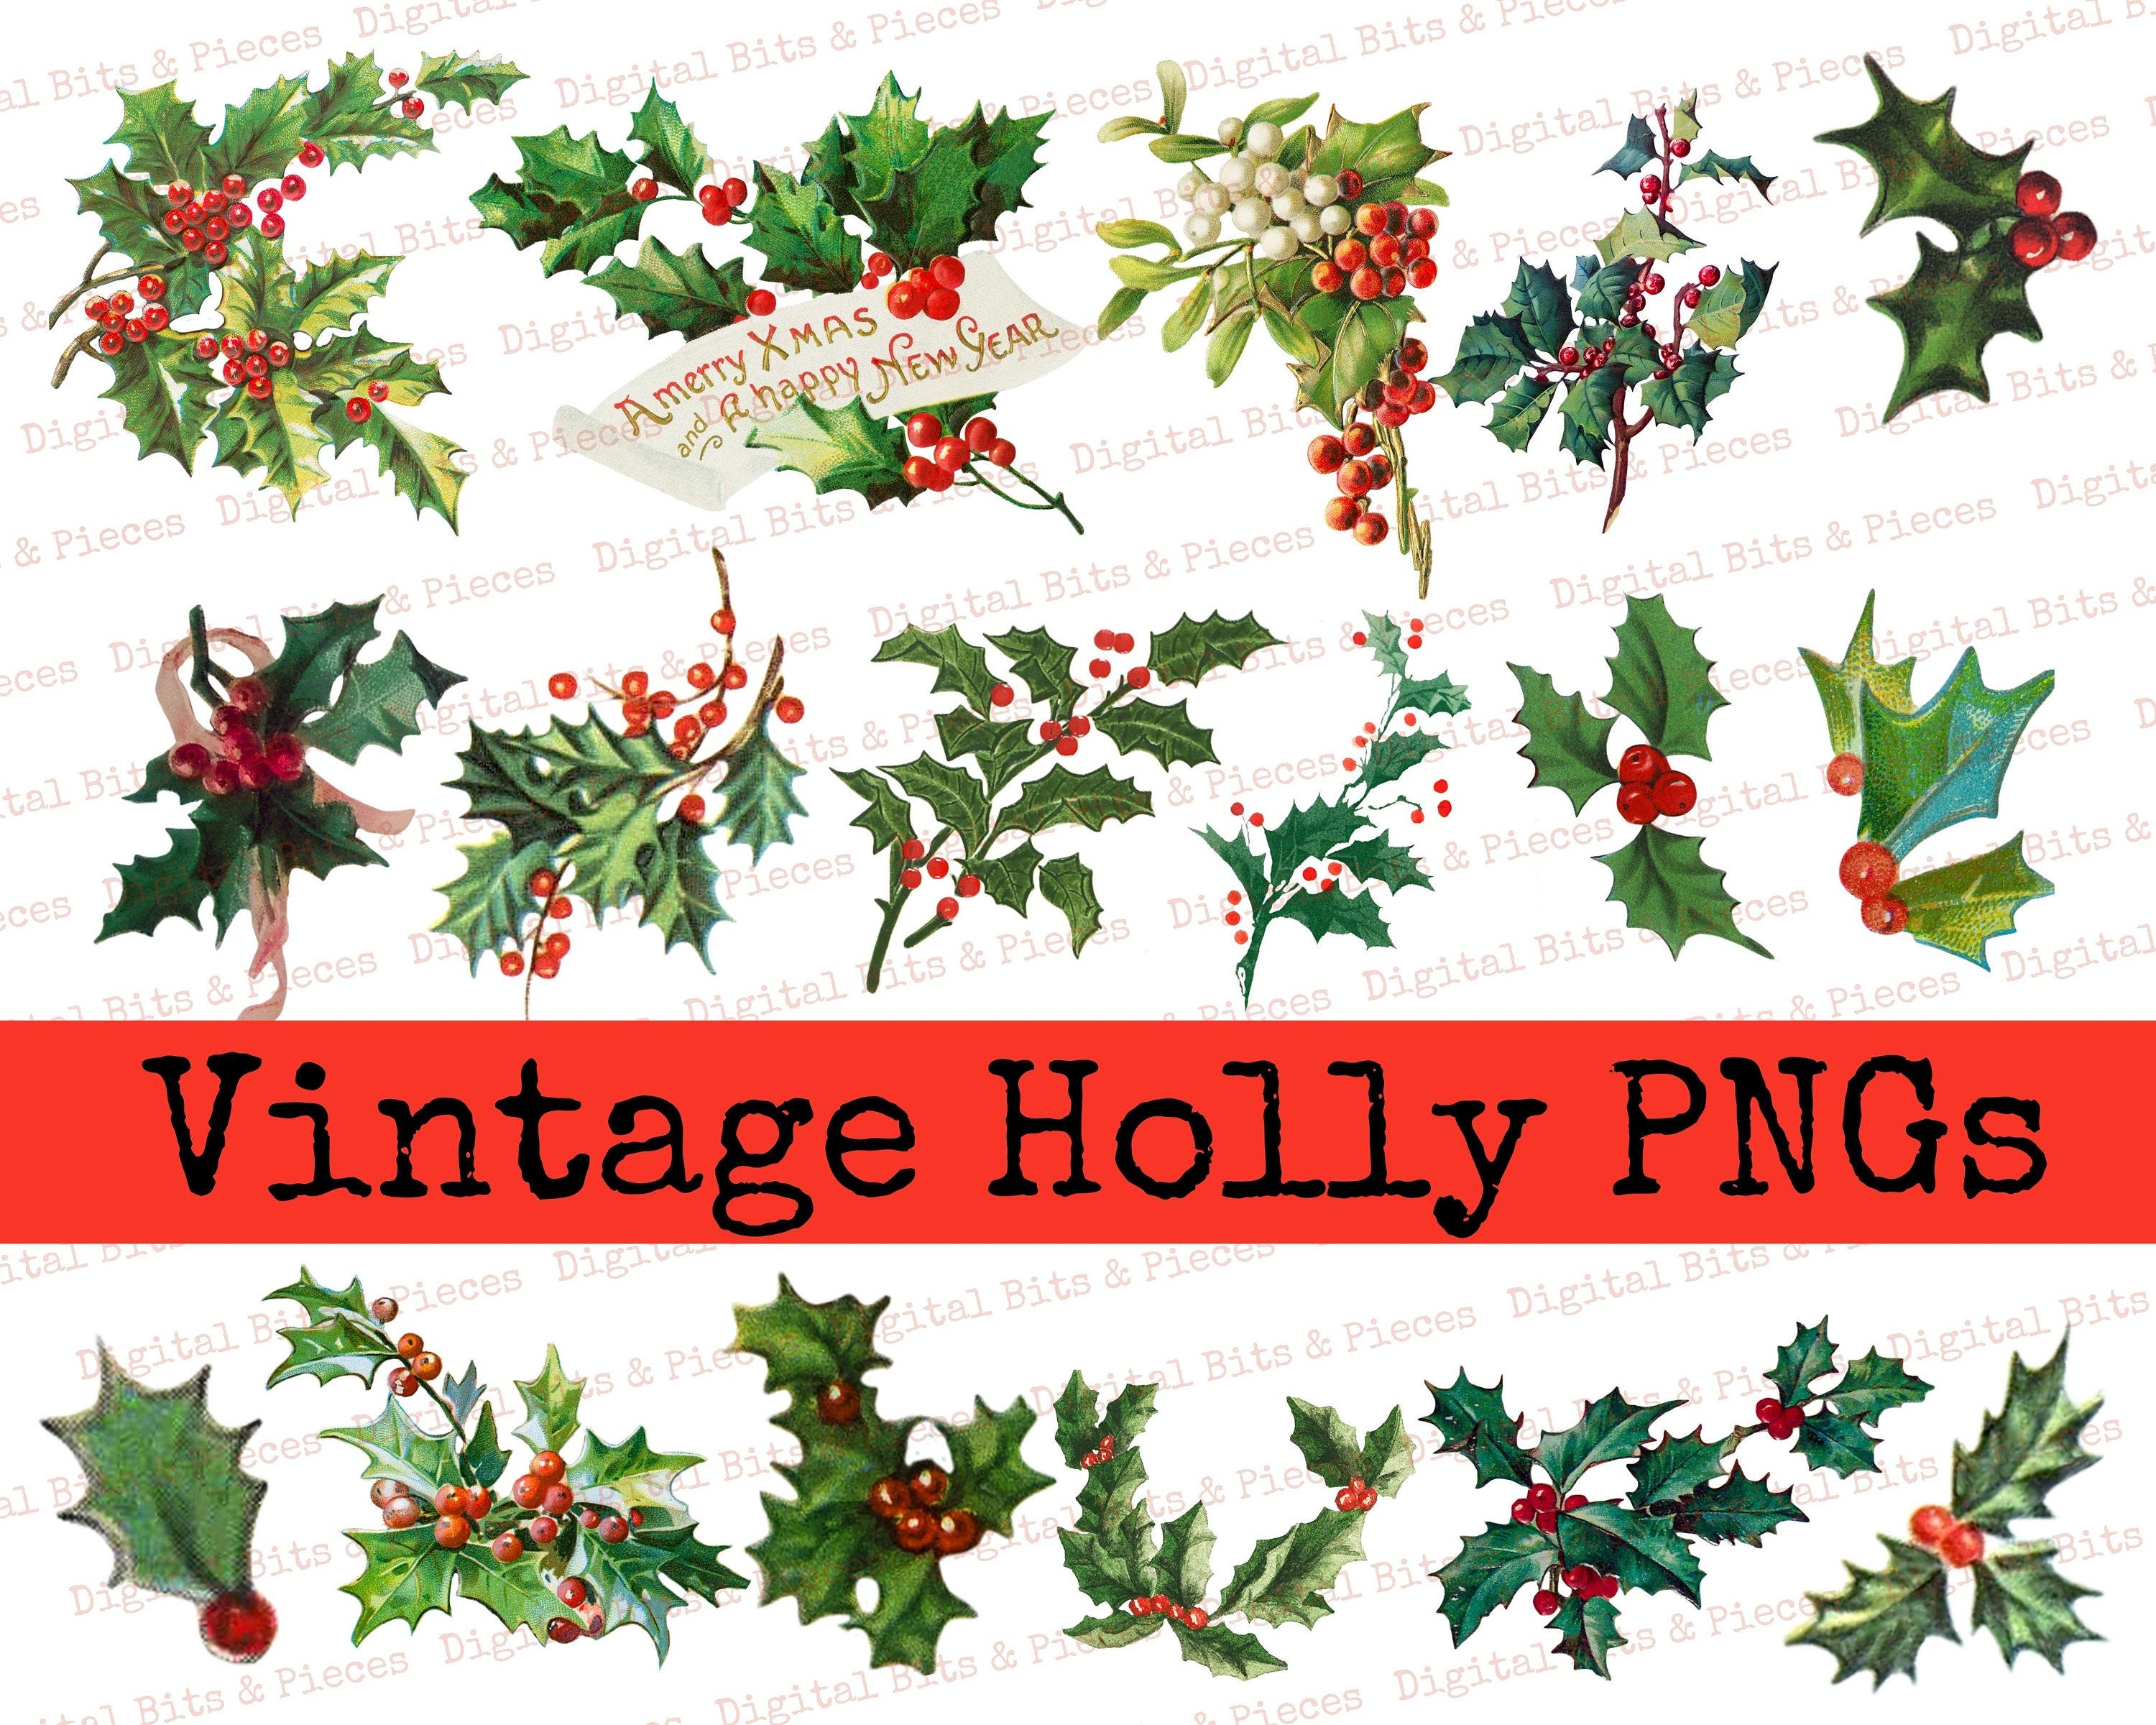 Vintage Holly Leaves Clip Art Bundle, Retro Christmas, Junk Journal, Collage Elements, Instant Download, Vintage Christmas PNGs, Fussy Cut